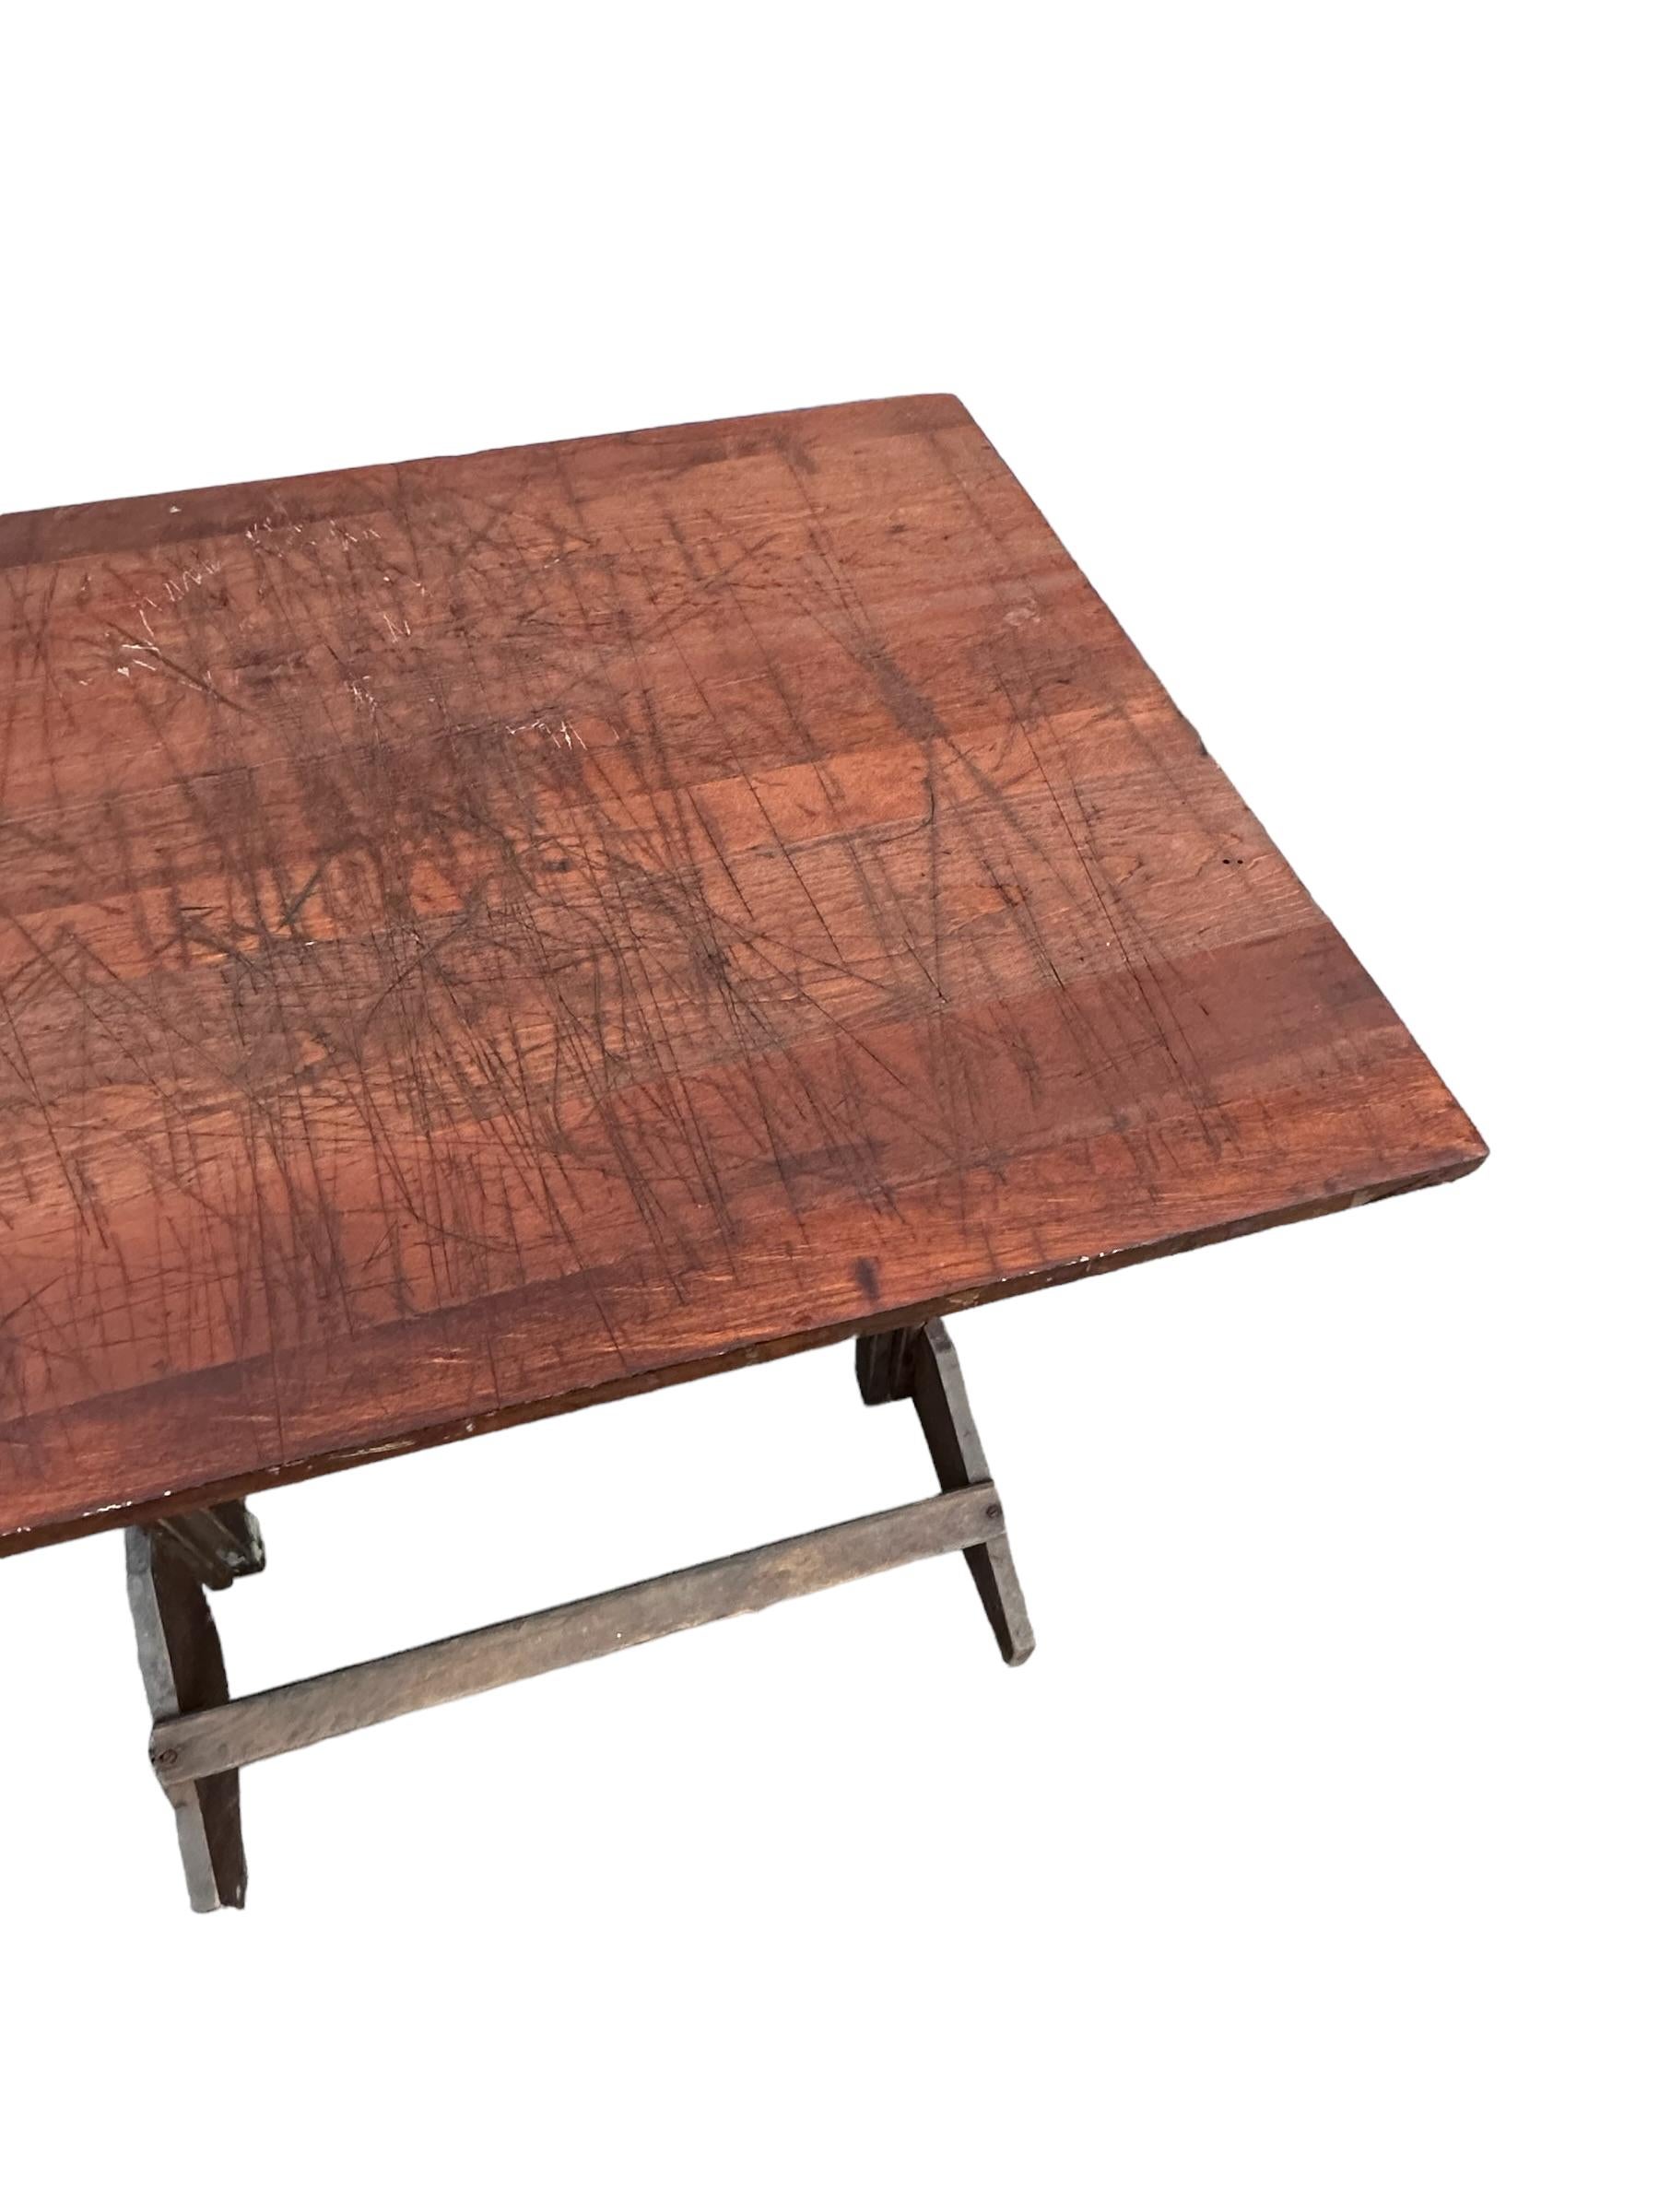 Anco Bilt Antique Solid Wood Adjustable Drafting Table 1